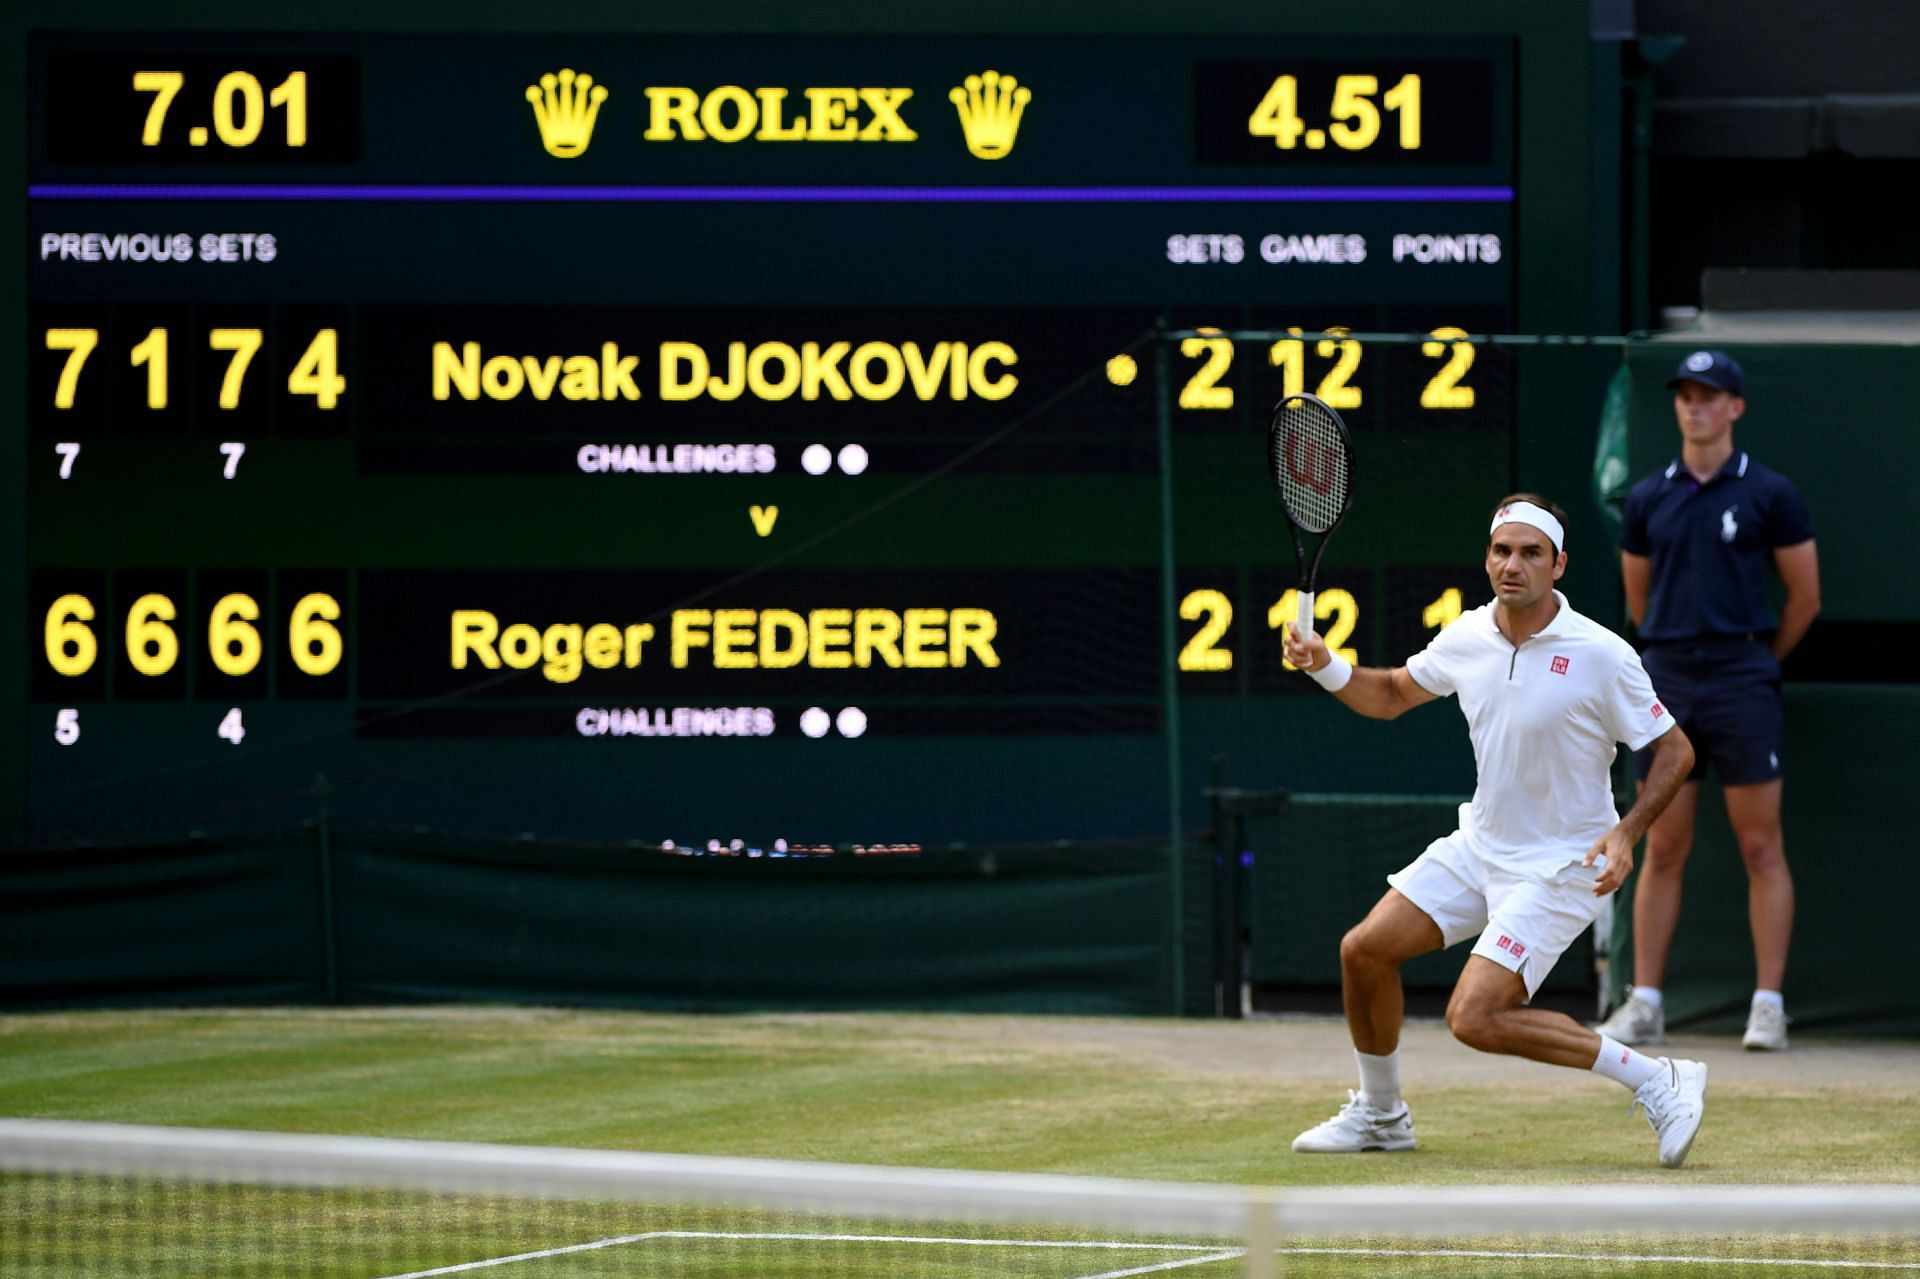 Roger Federer taking on Novak Djokovic at the Wimbledon 2019 final